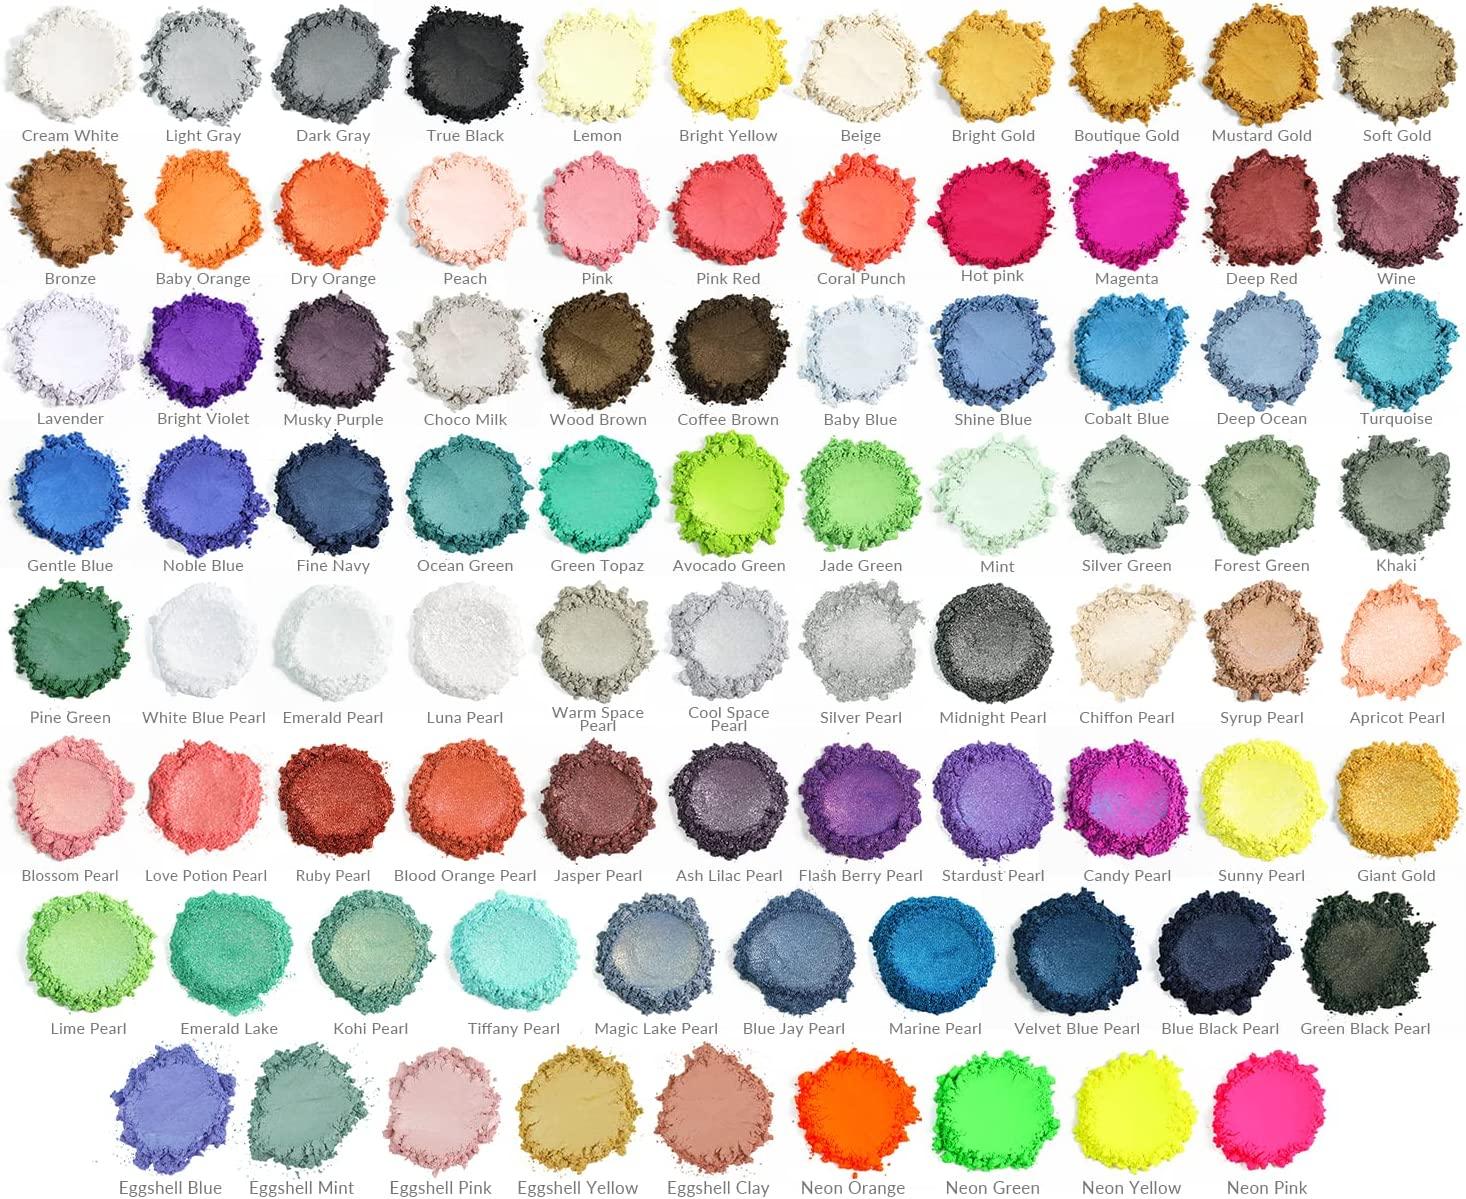 Ice Resin Brand Tint 0.5oz Bottle Color Dye for All Resin (Select